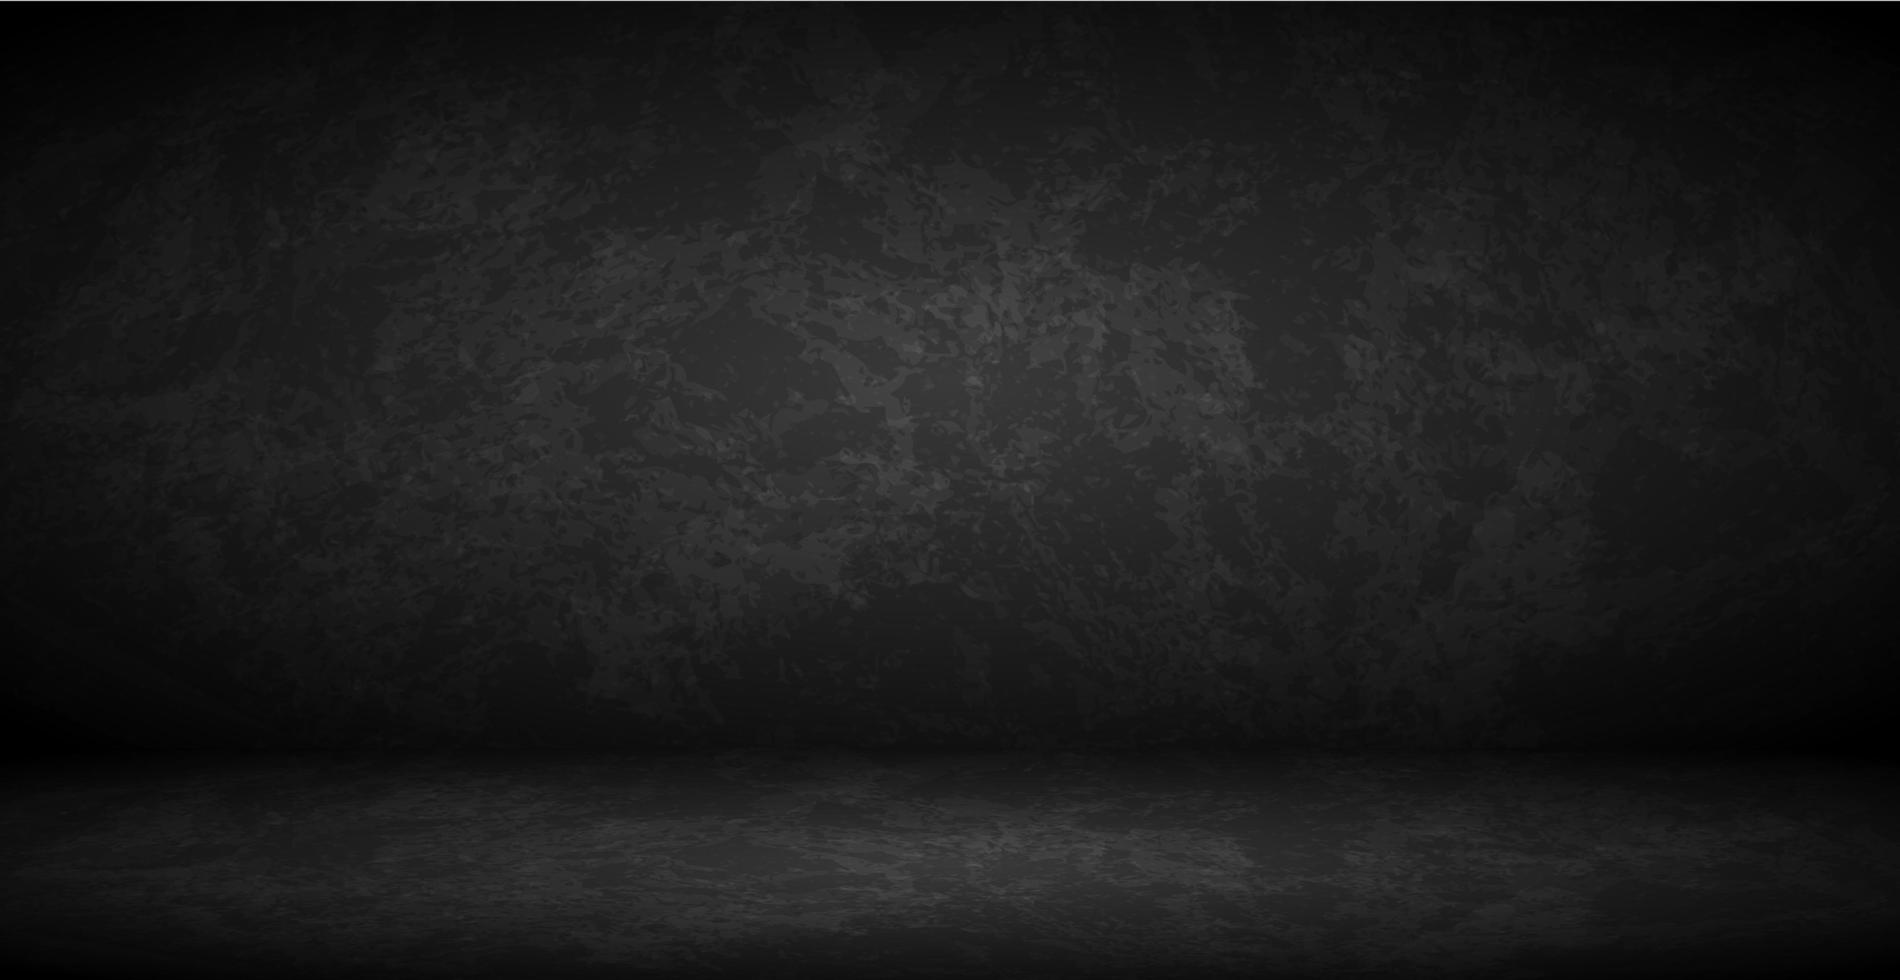 pared negra en estudio oscuro, plantilla de fondo web - vector